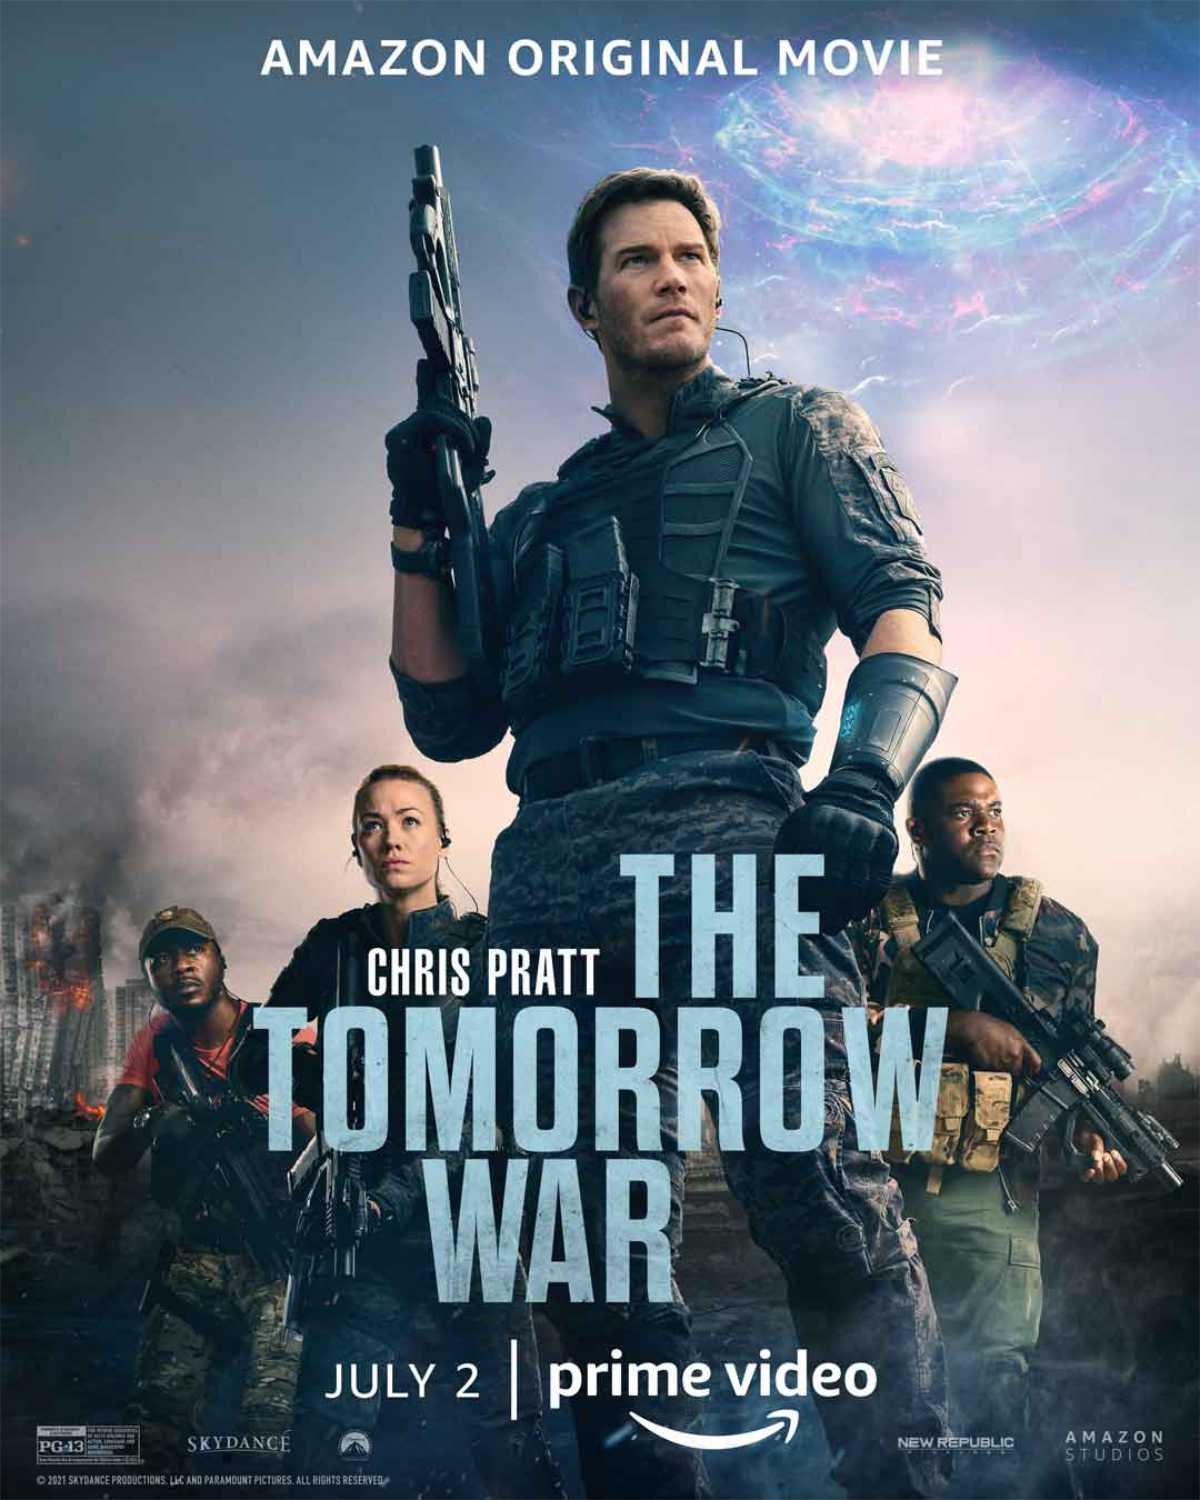 Chris Pratt in The Tomorrow War